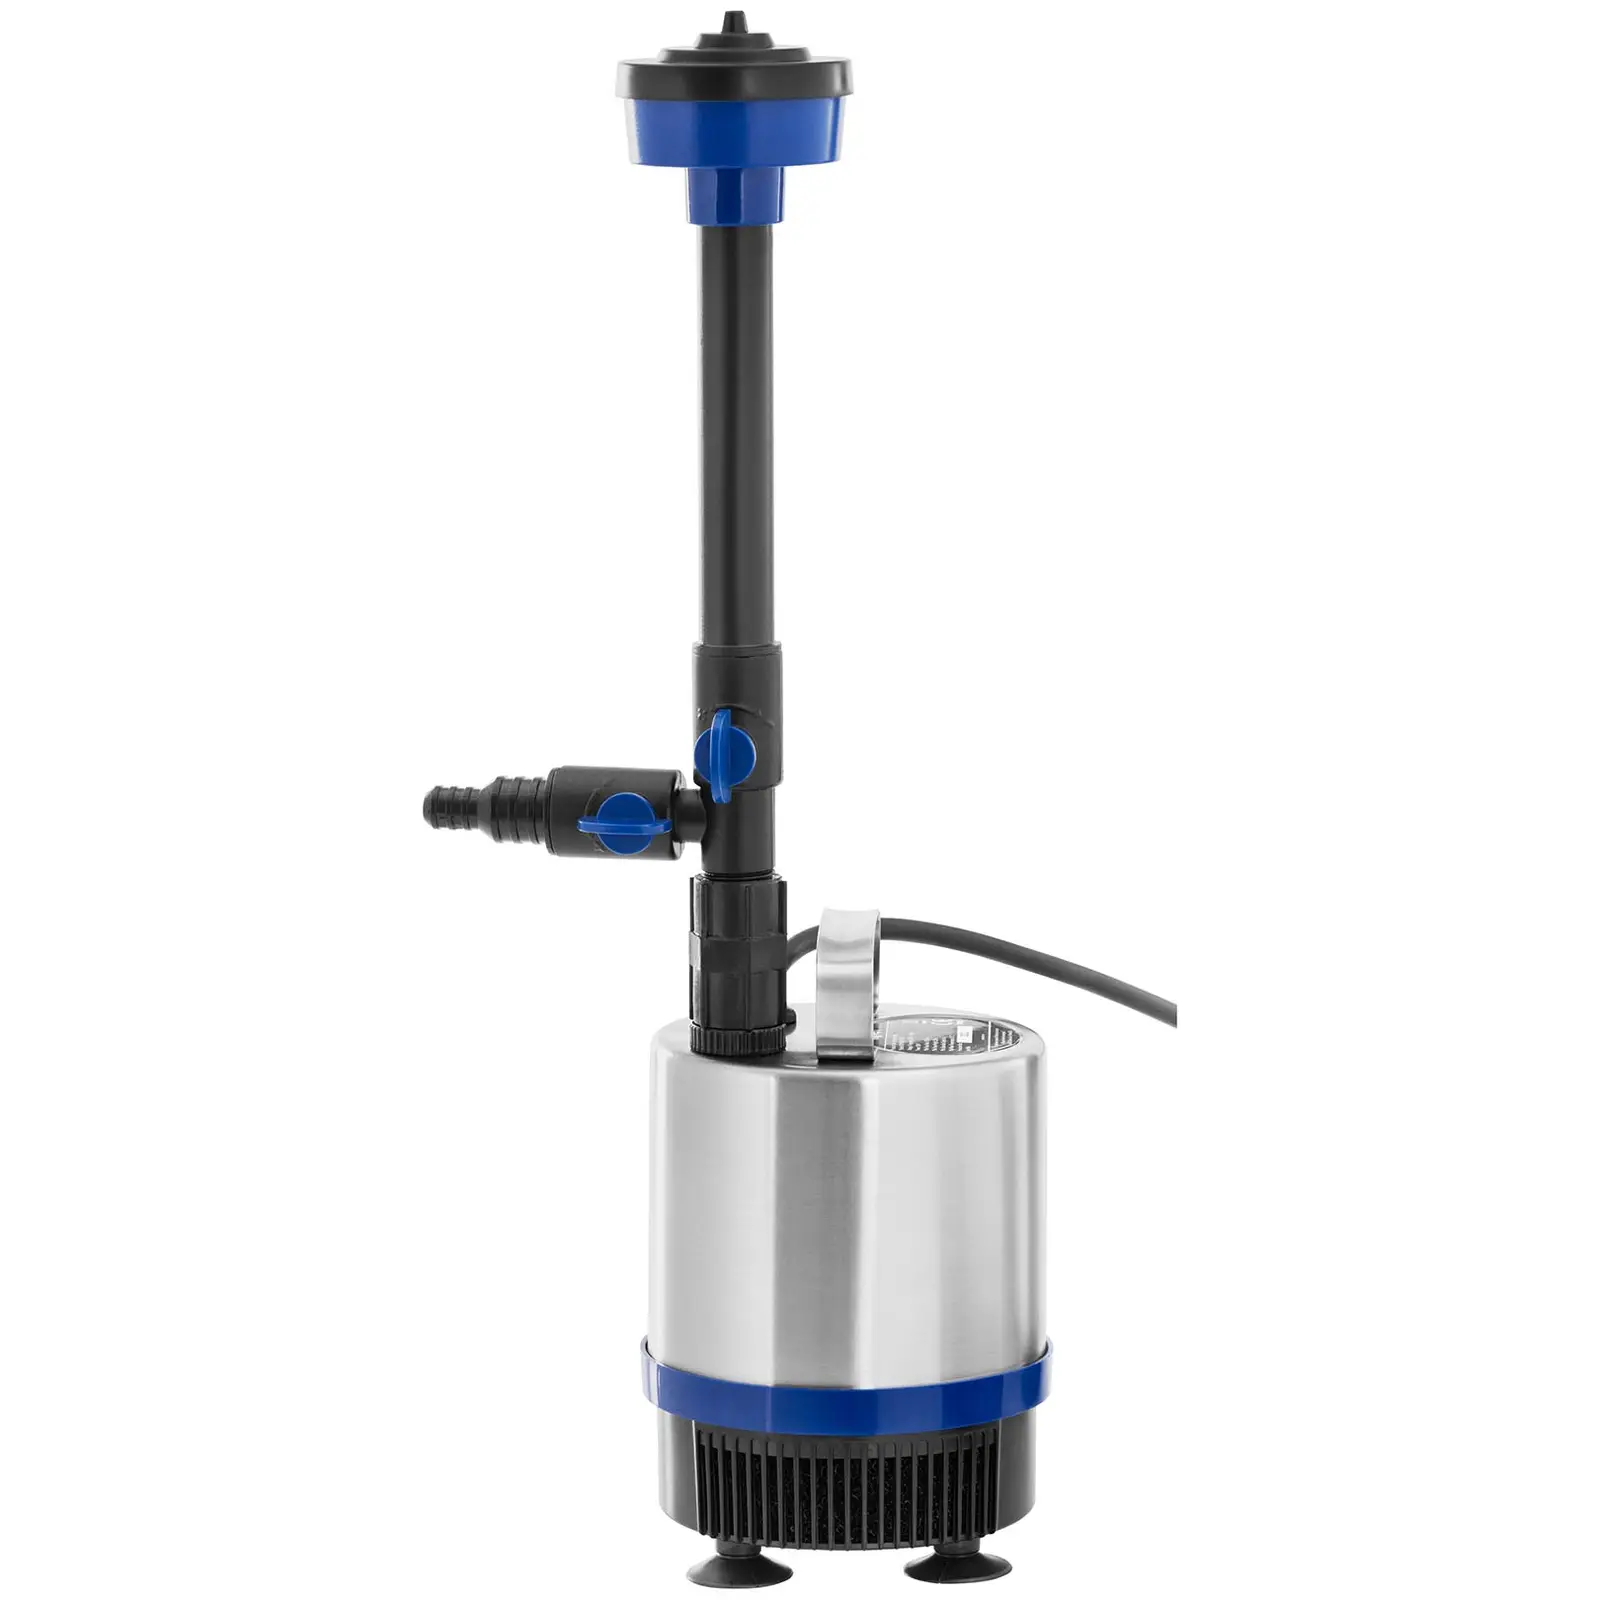 Fountain pump - 1750 L/h - 0.19 bar - 4 nozzles